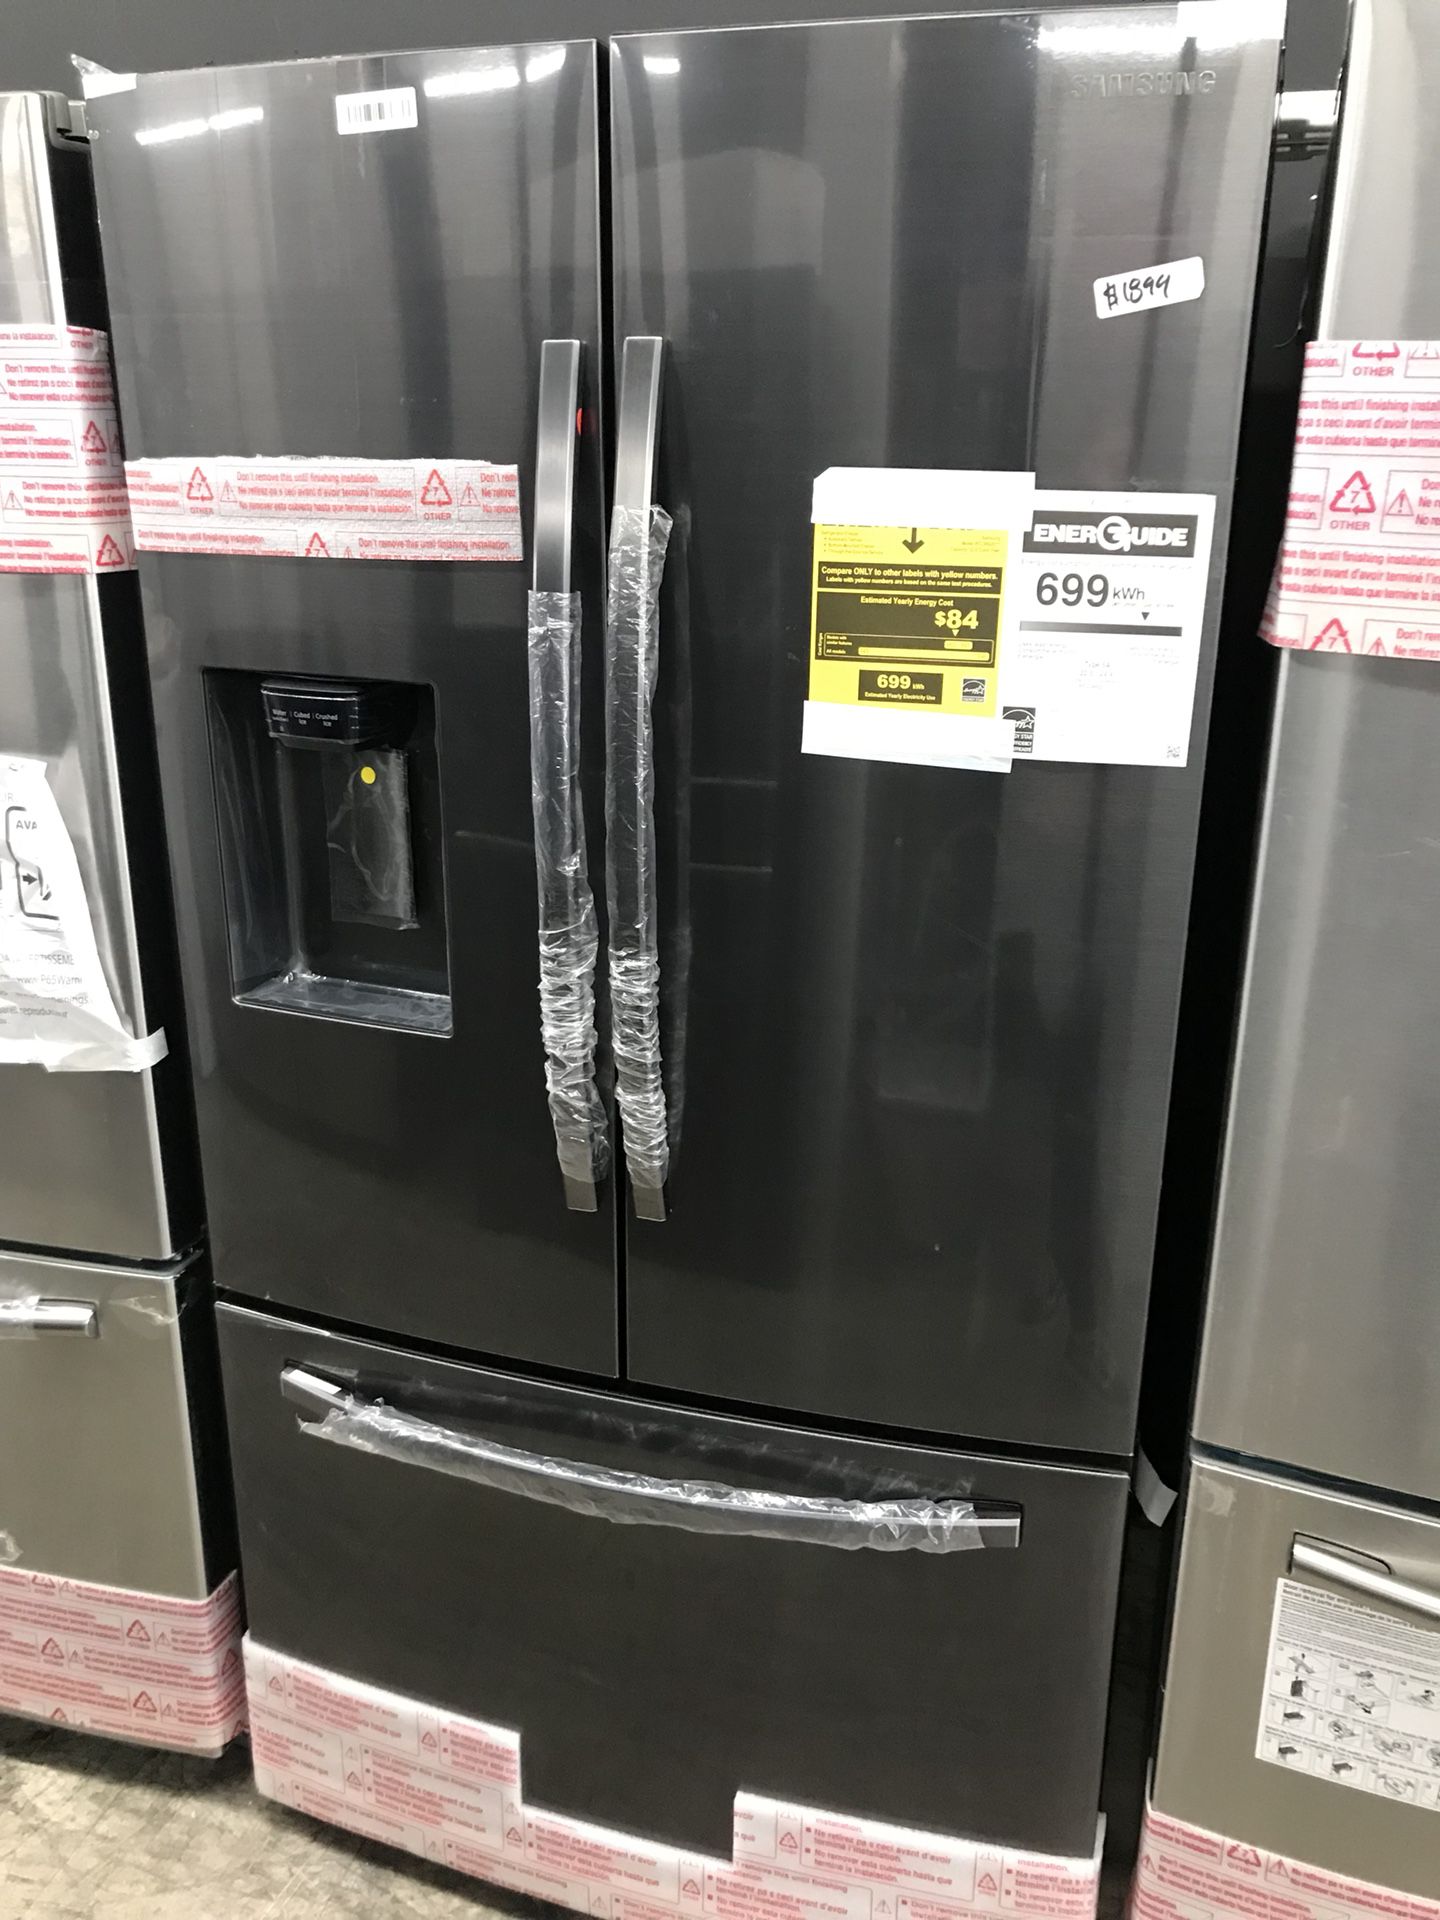 New Samsung French door black stainless steel refrigerator counter depth